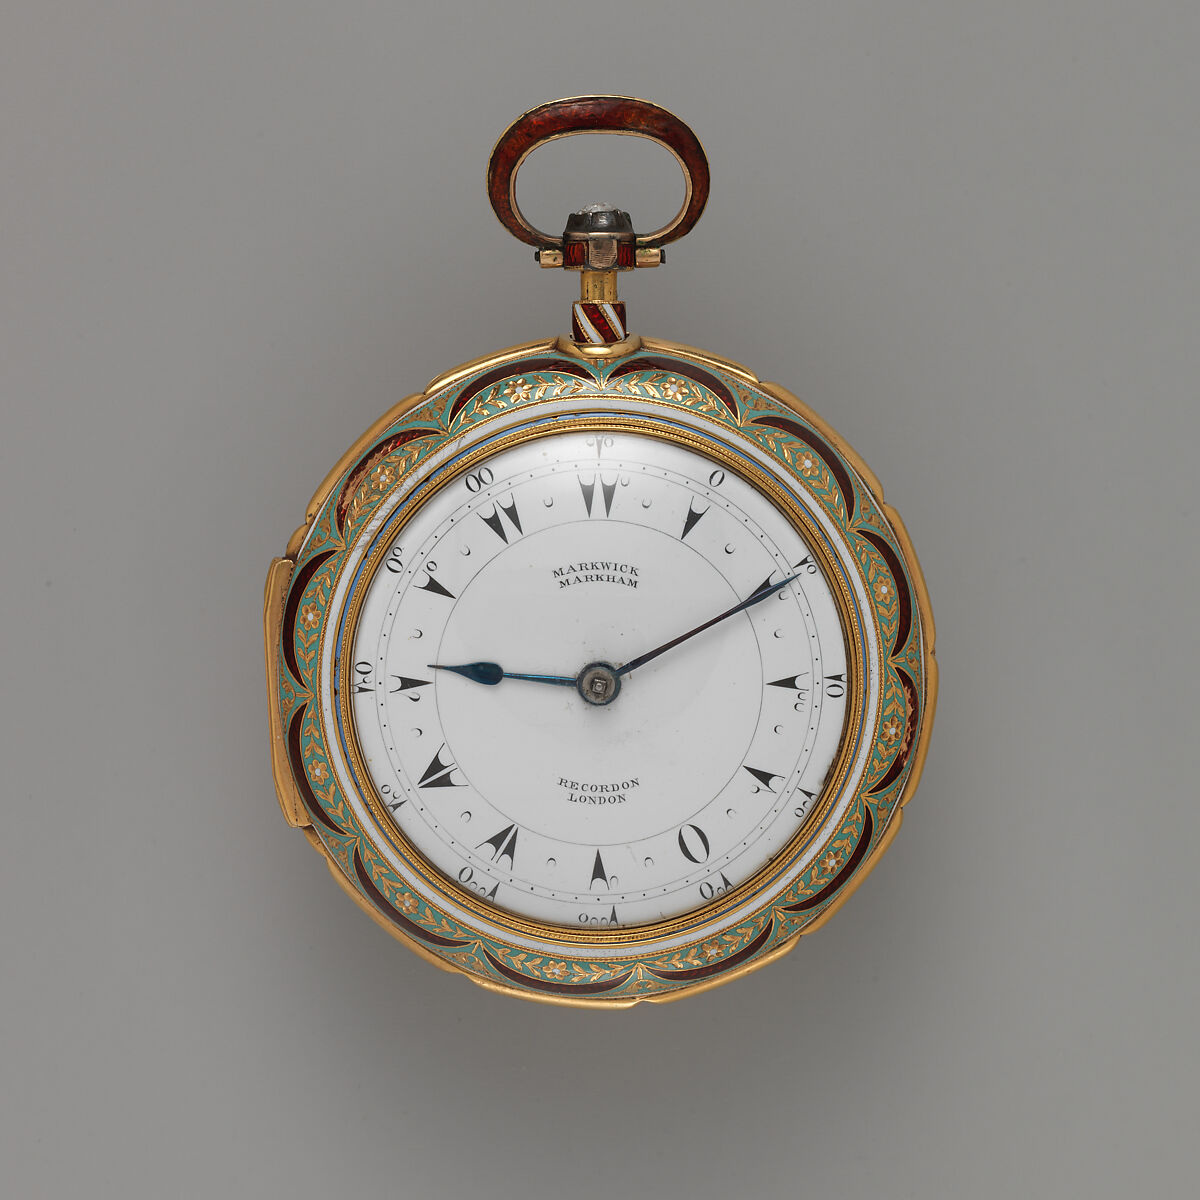 Watch, Watchmaker: Firm of Marwick, Markham and Recordon, Gold, enamel, diamond, British, London 